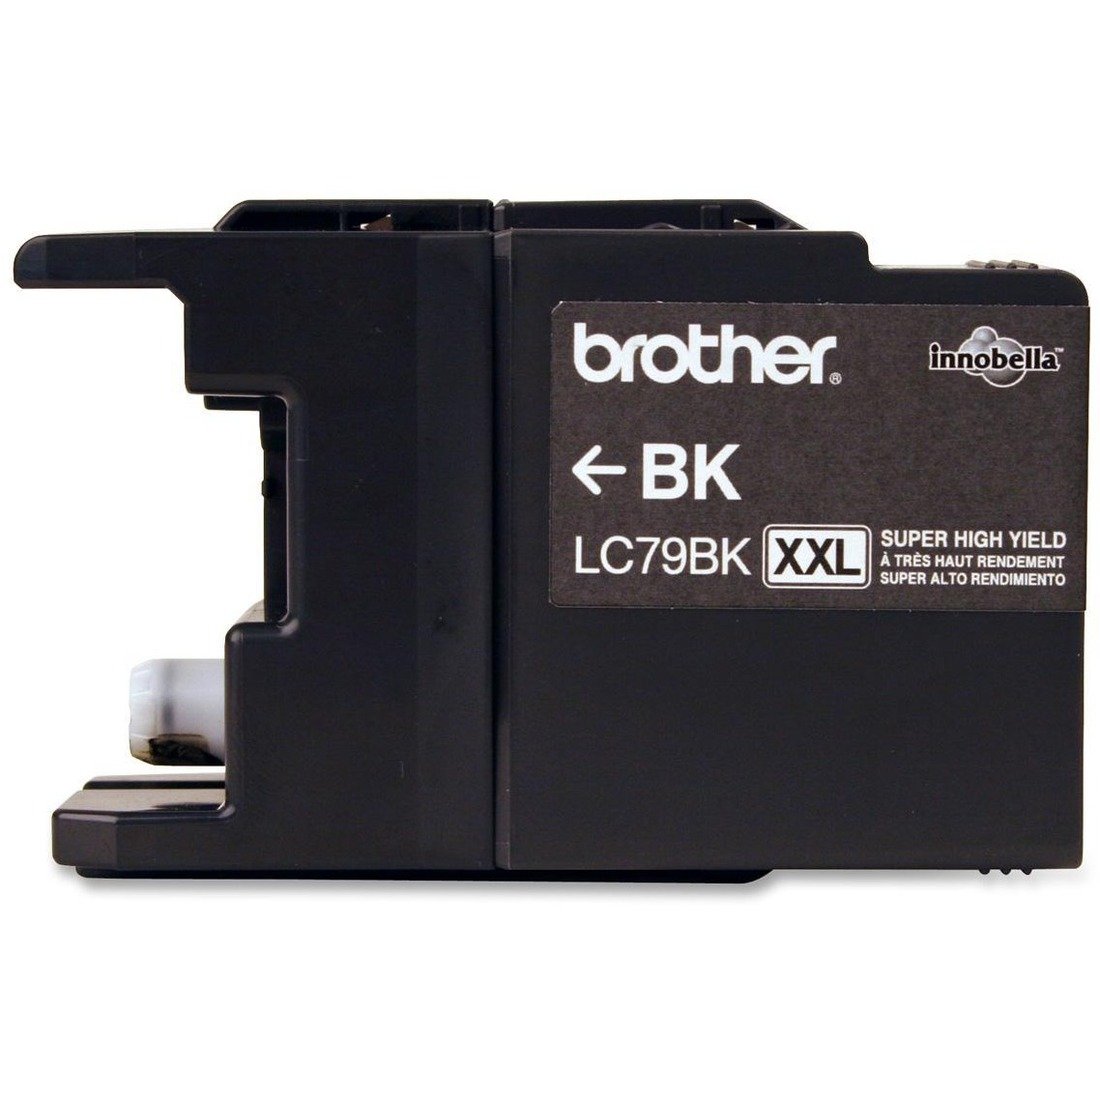 Absolute Toner Original Genuine Brother LC79BKS Innobella Black Ink Cartridge Super High Yield Original Brother Cartridges